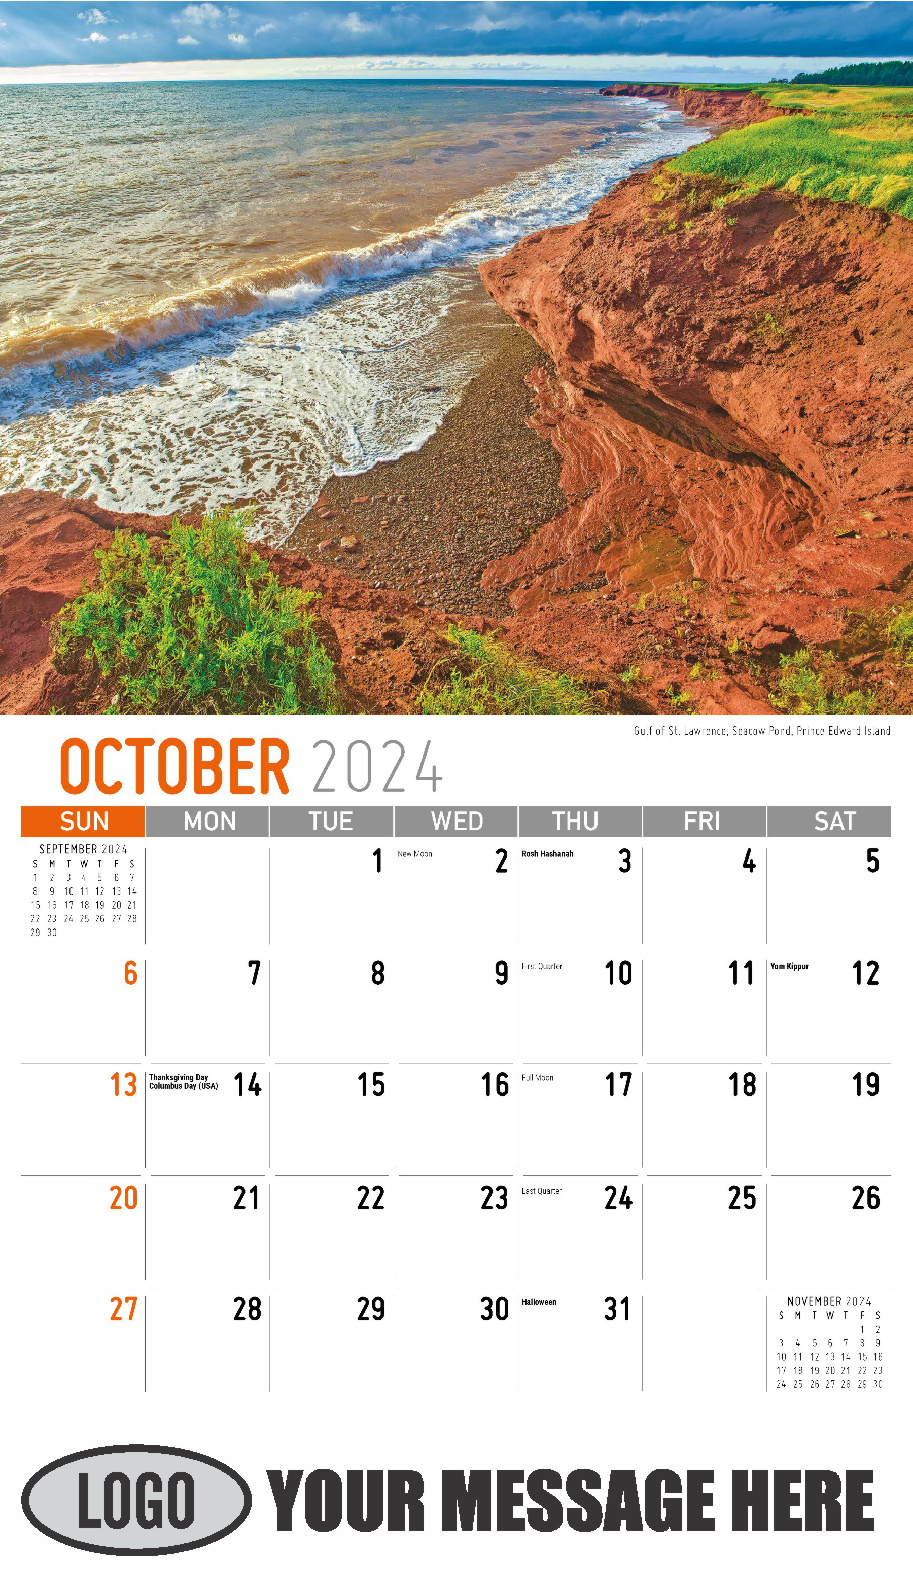 Atlantic Canada Scenic 2024 Business Promotion Calendar - October